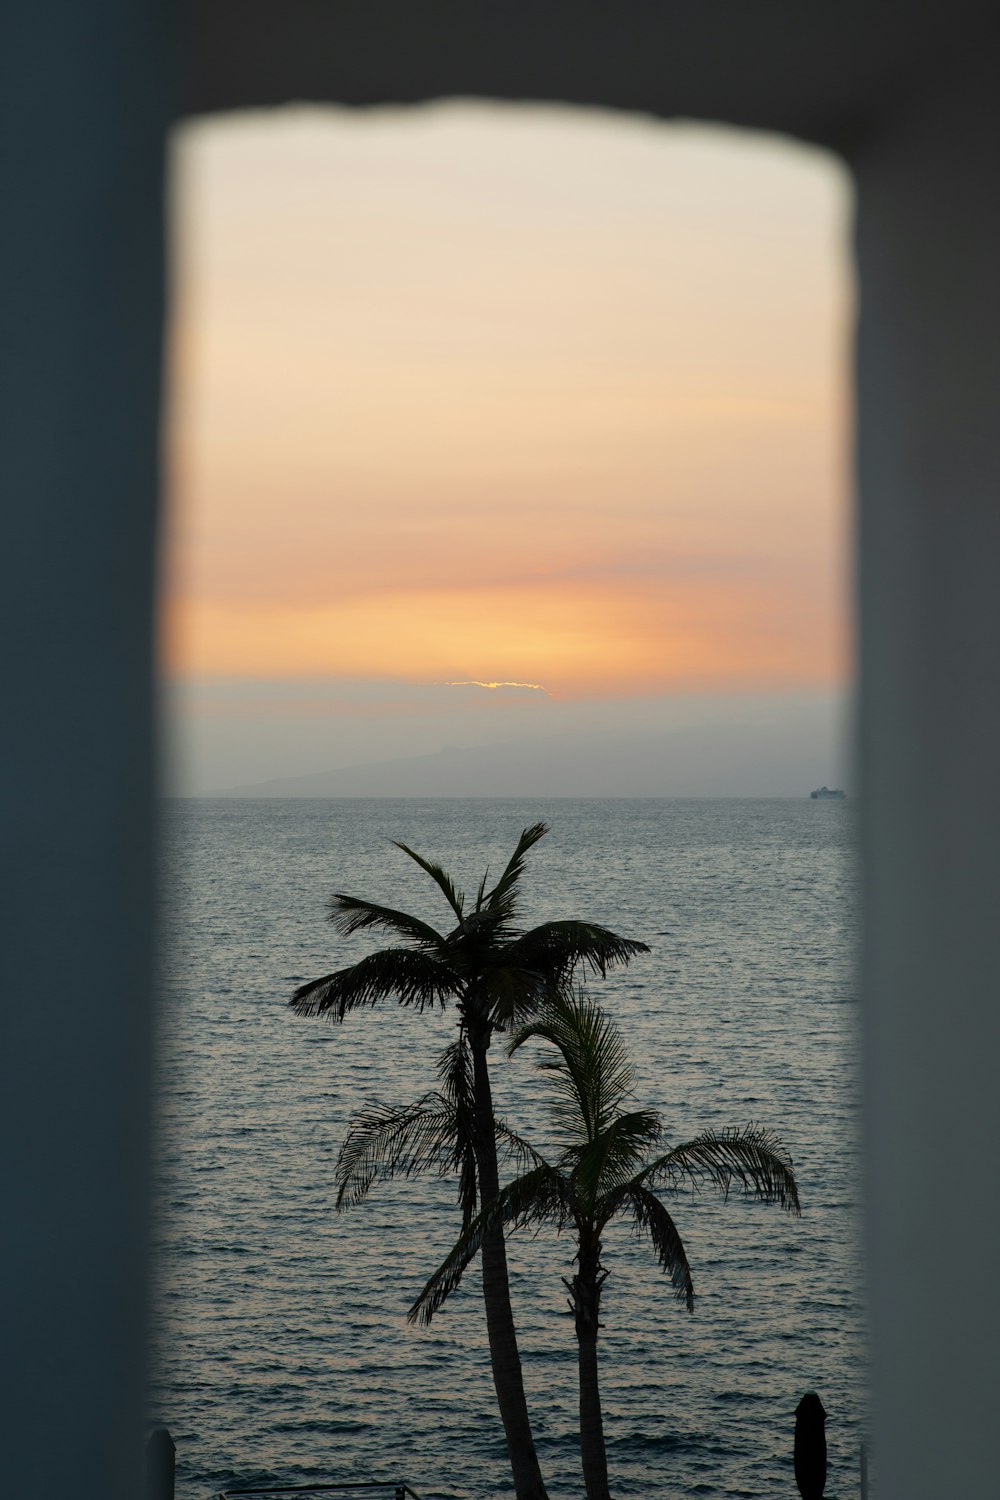 Una vista del océano a través de una ventana